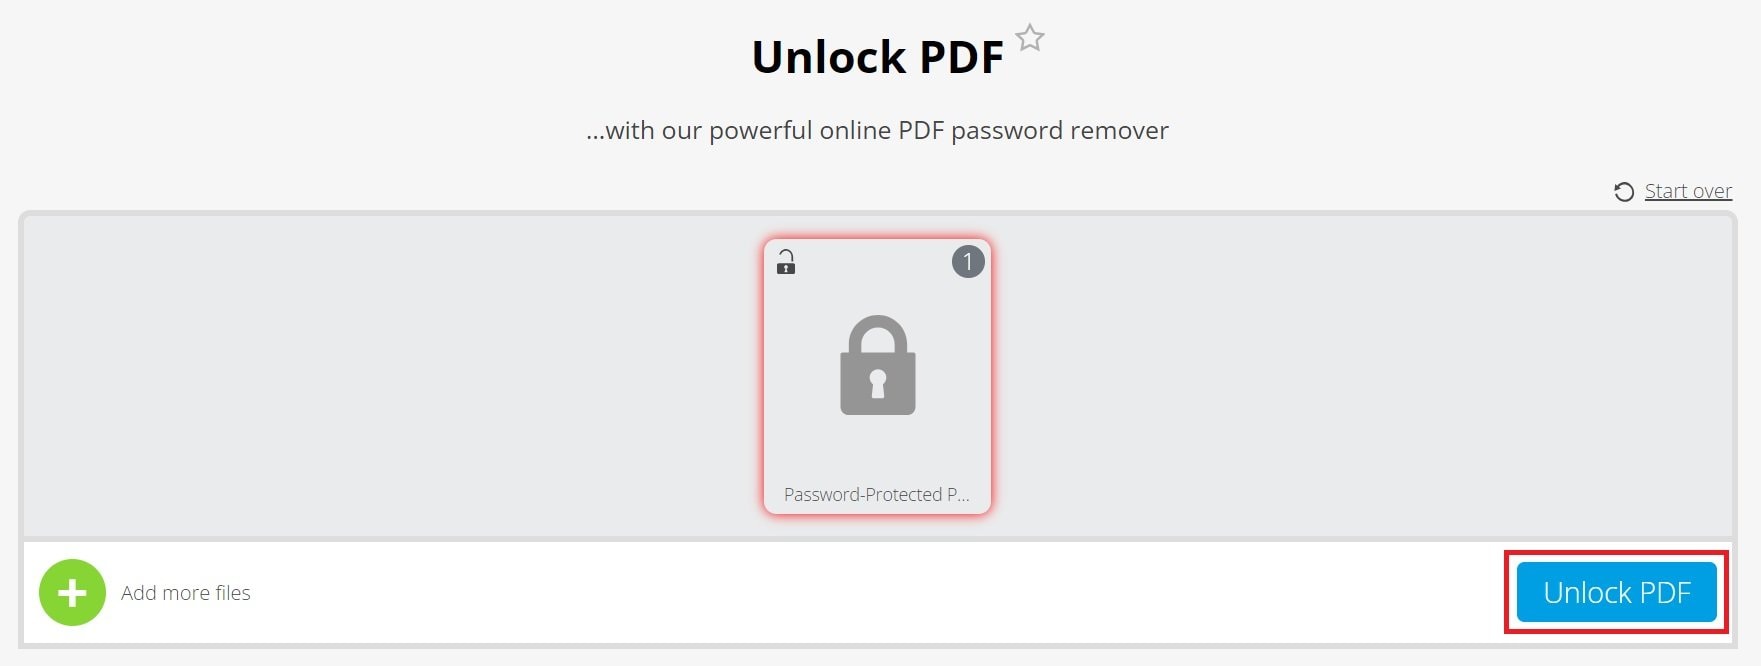 unlock password protected pdf to open it